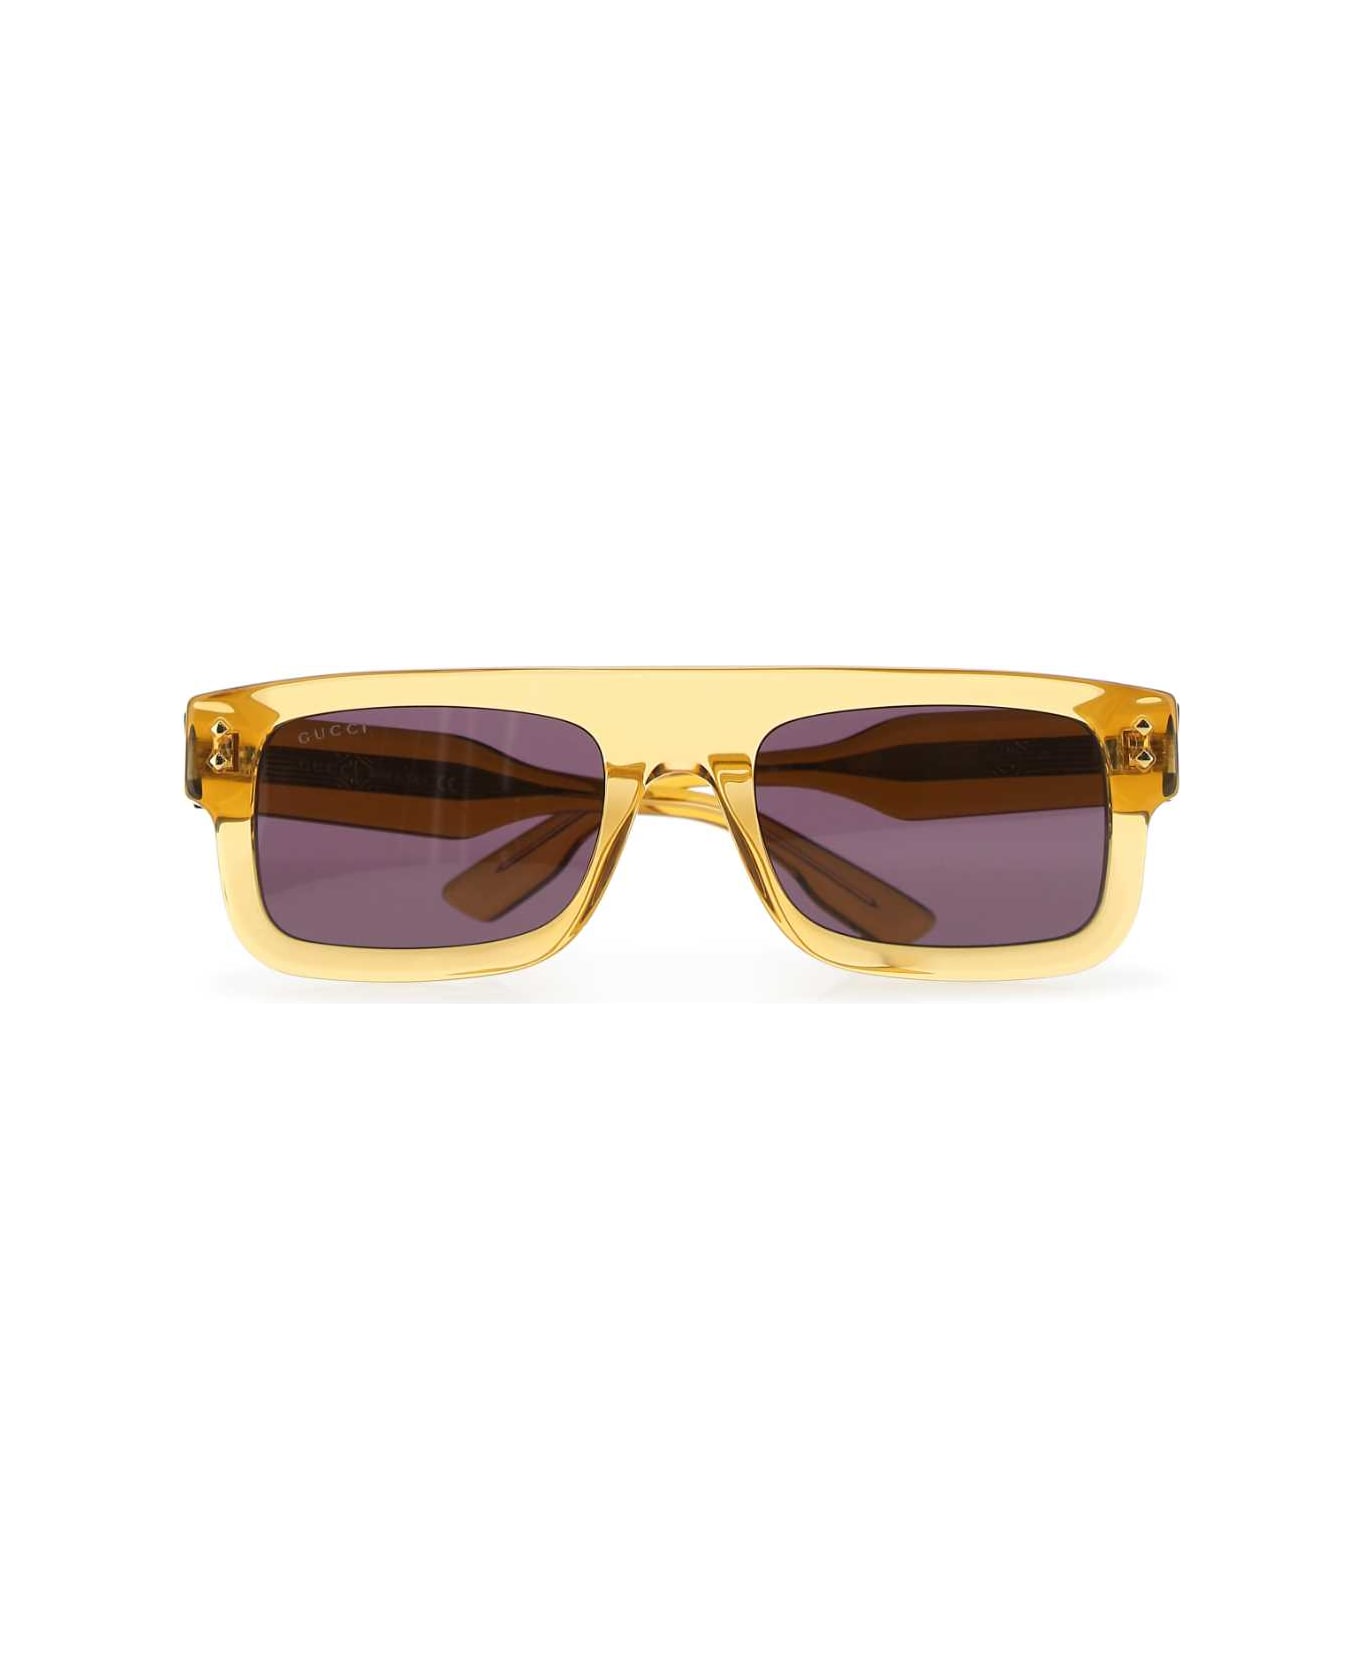 Gucci Ochre Acetate Sunglasses - 7012